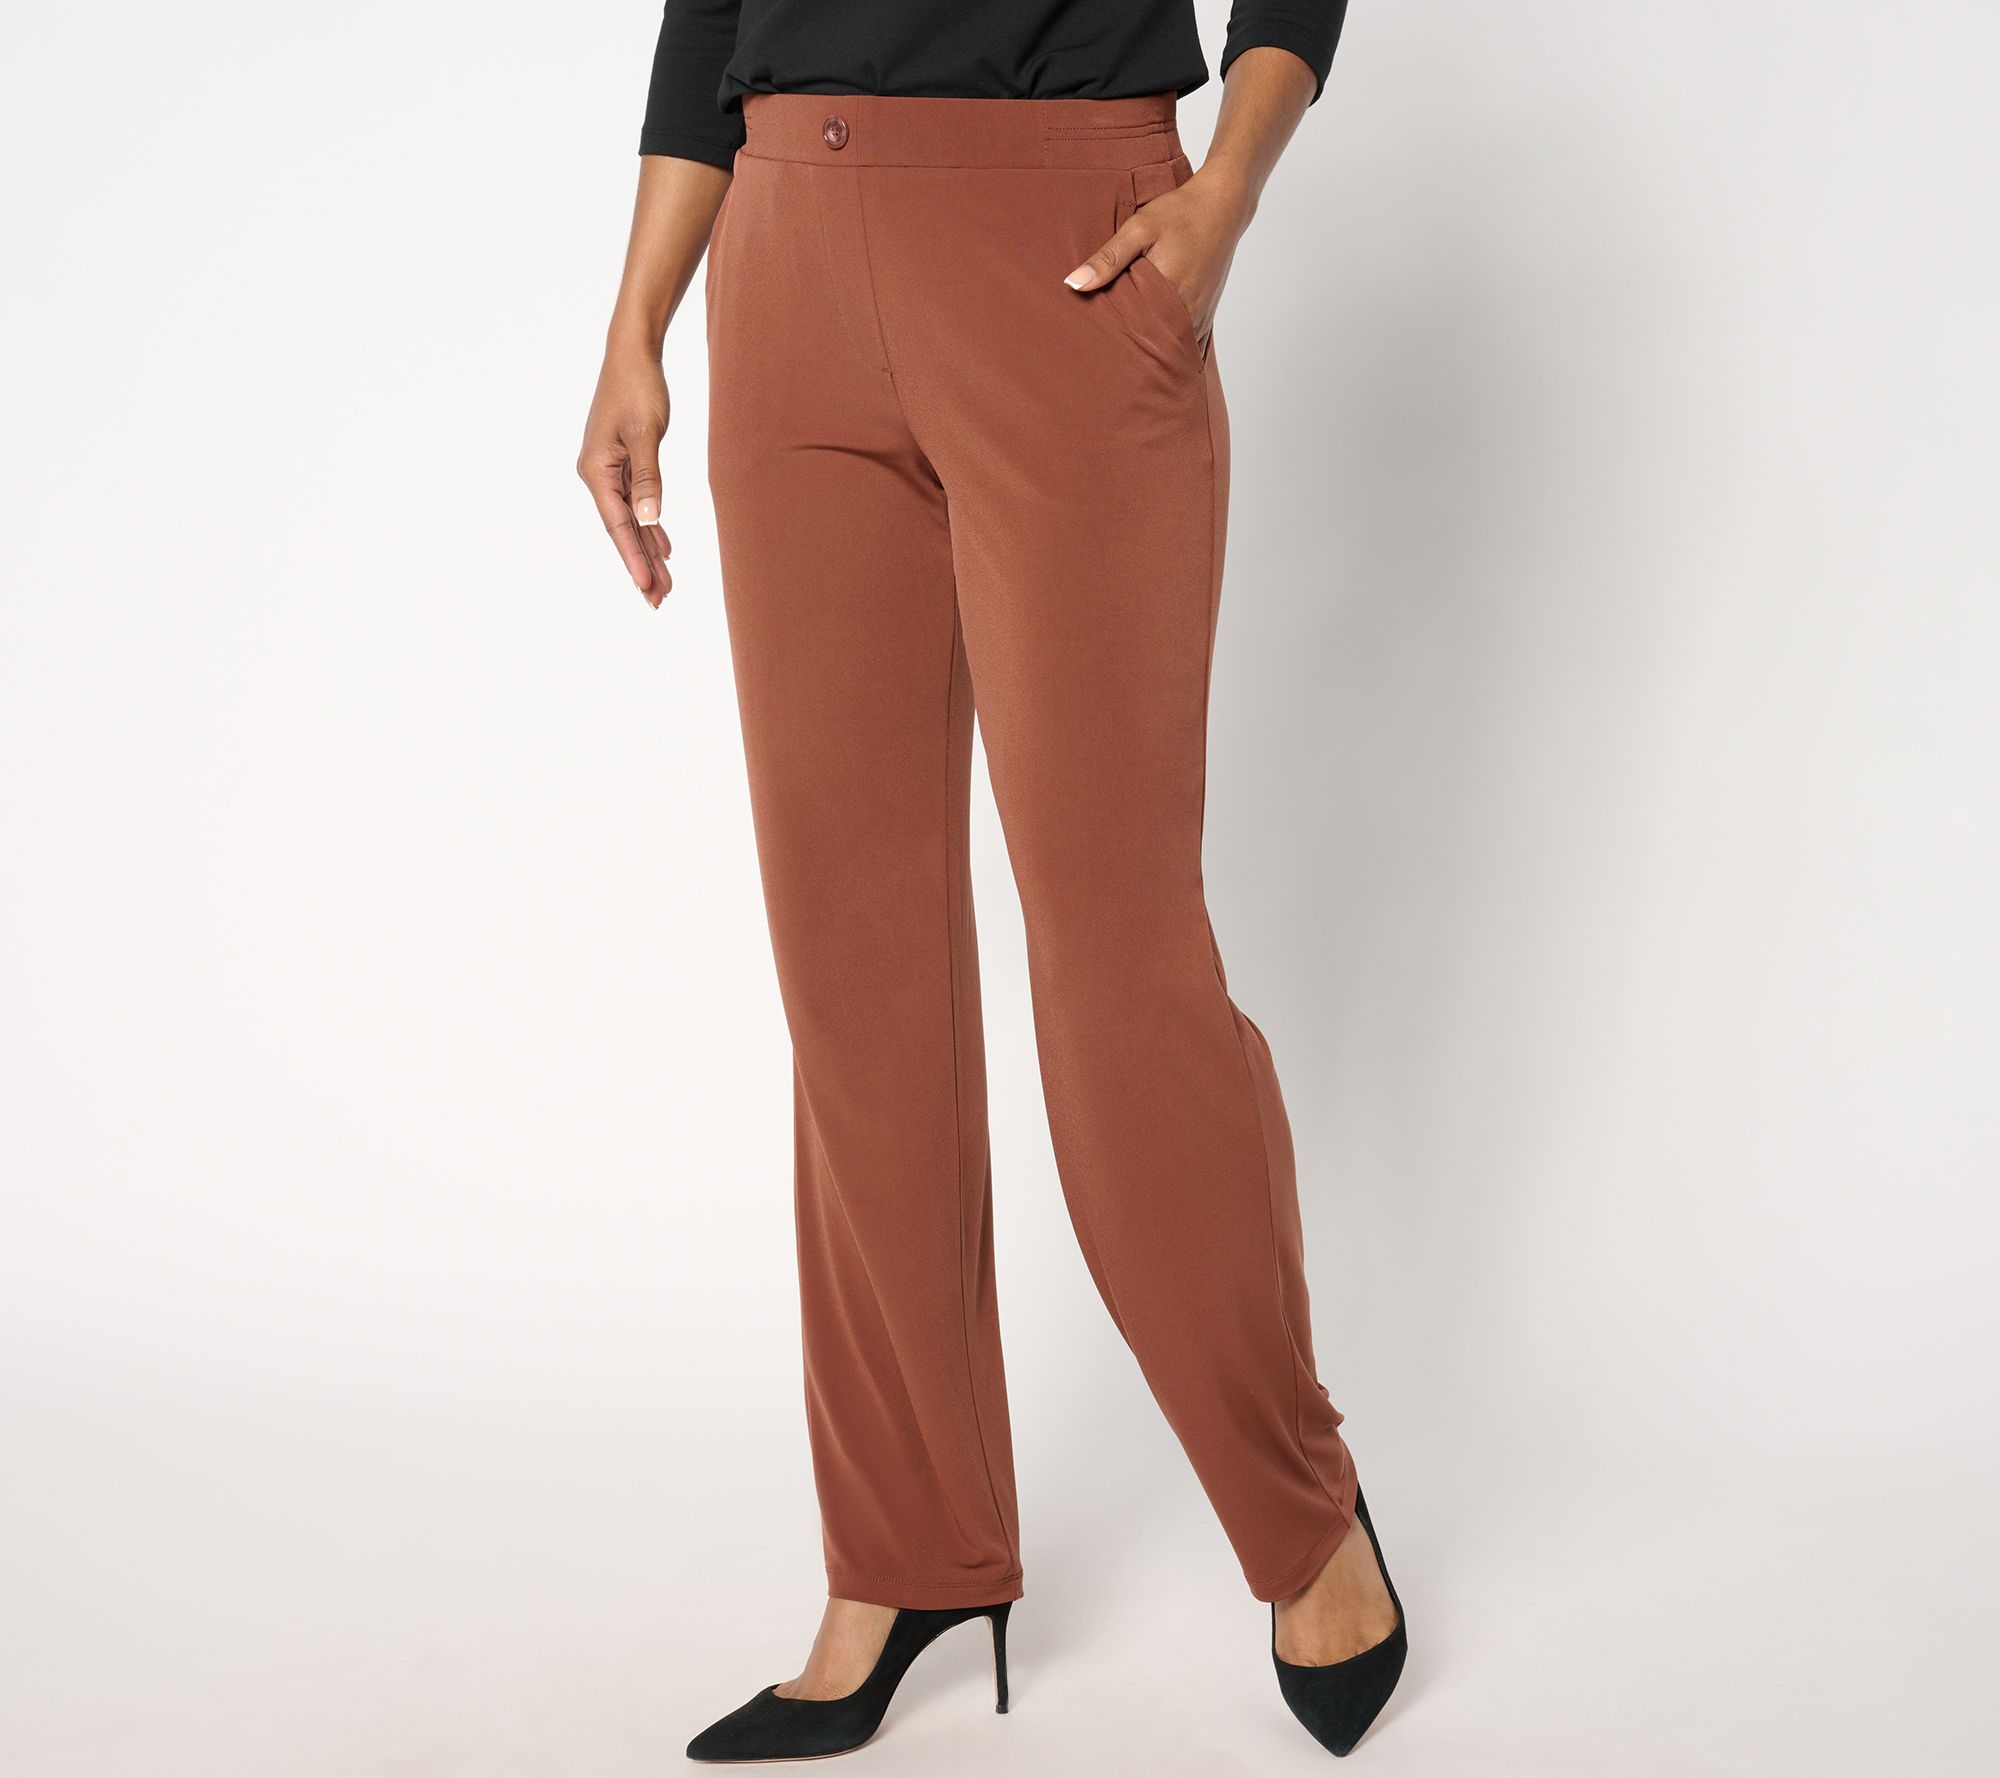 SUSAN GRAVER PRINTED Liquid Knit Pull-On Wide-Leg Pants (Chocolate, xs)  A374081 $22.48 - PicClick